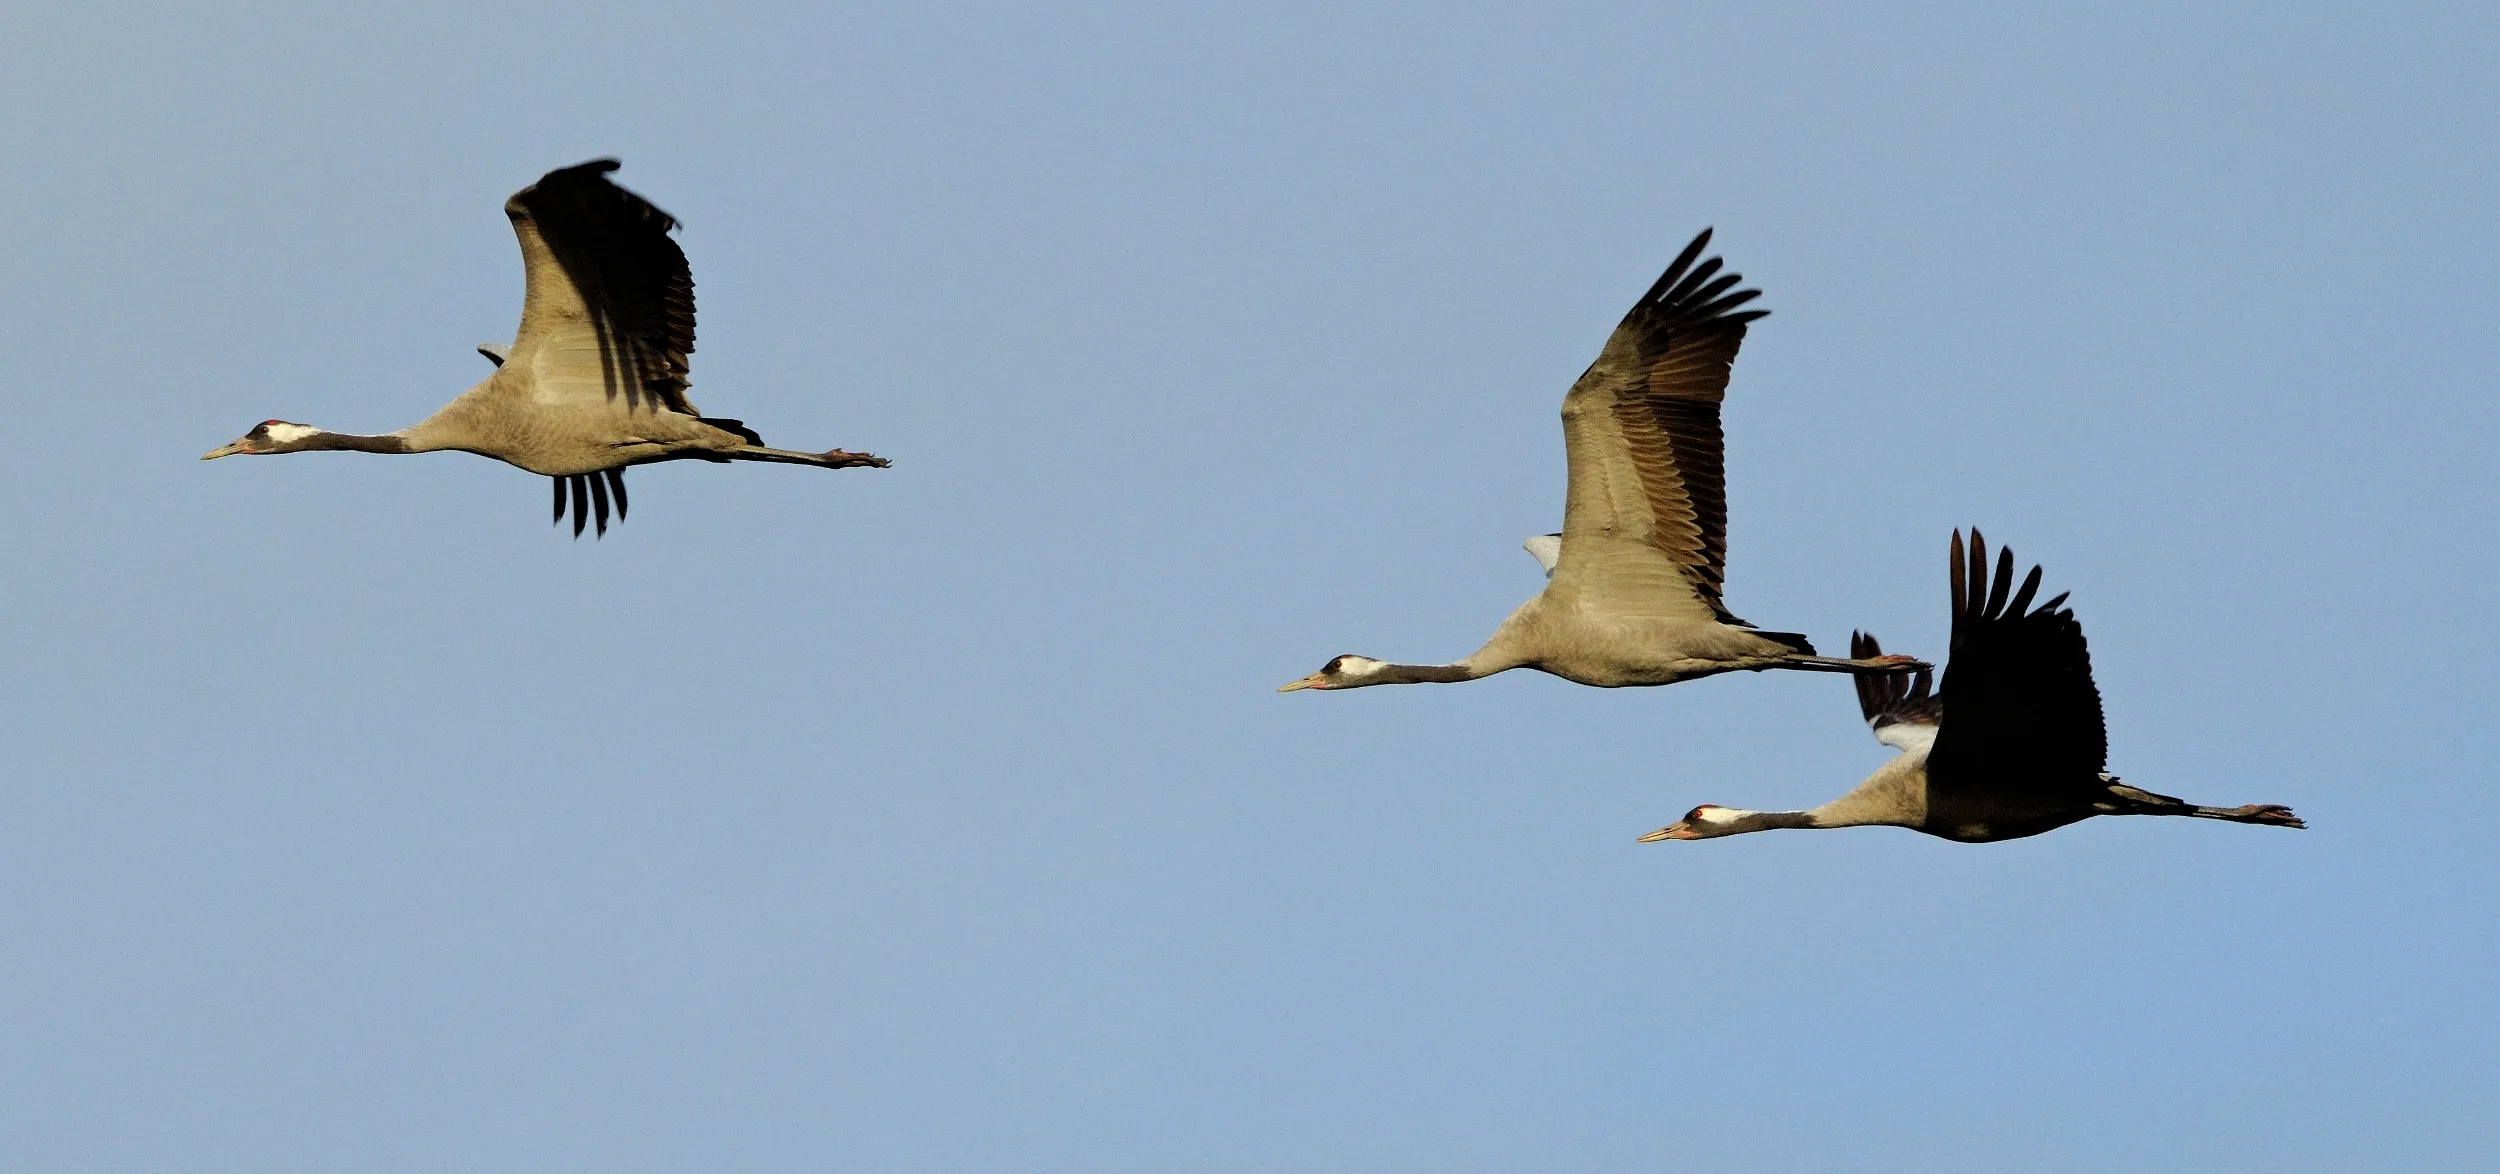 Three Crane in flight against a dusky blue sky. 